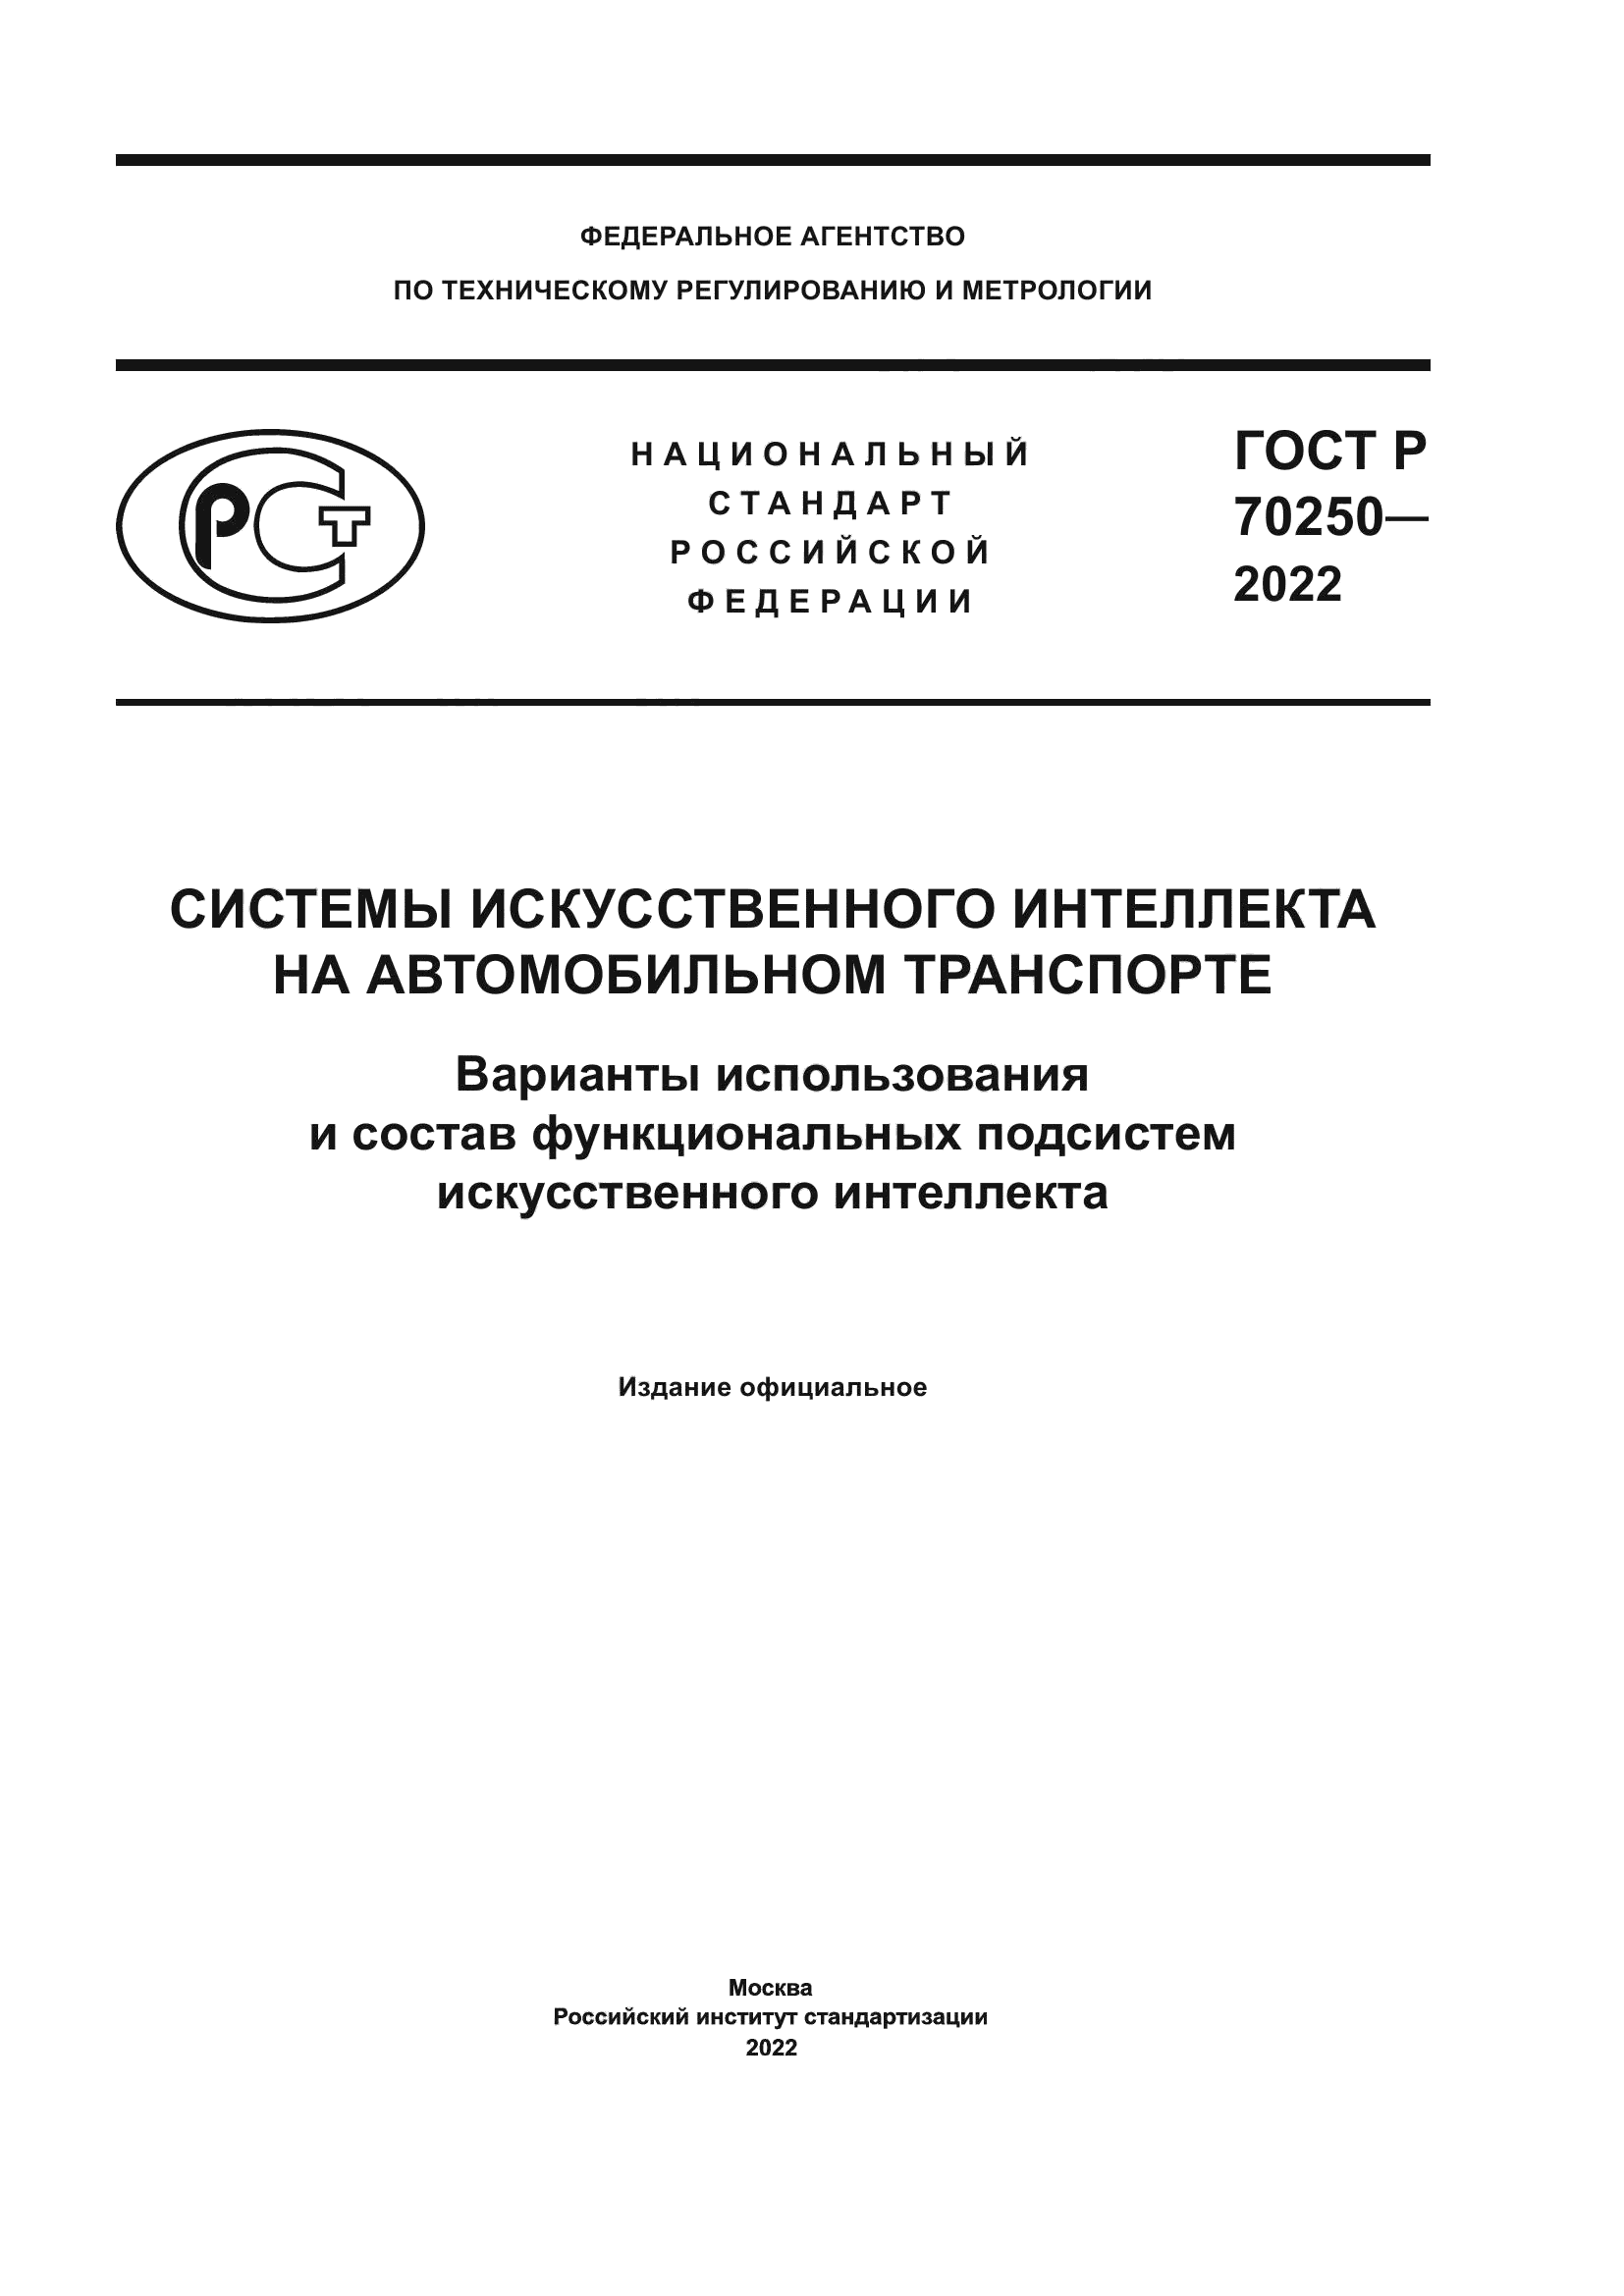 ГОСТ Р 70250-2022